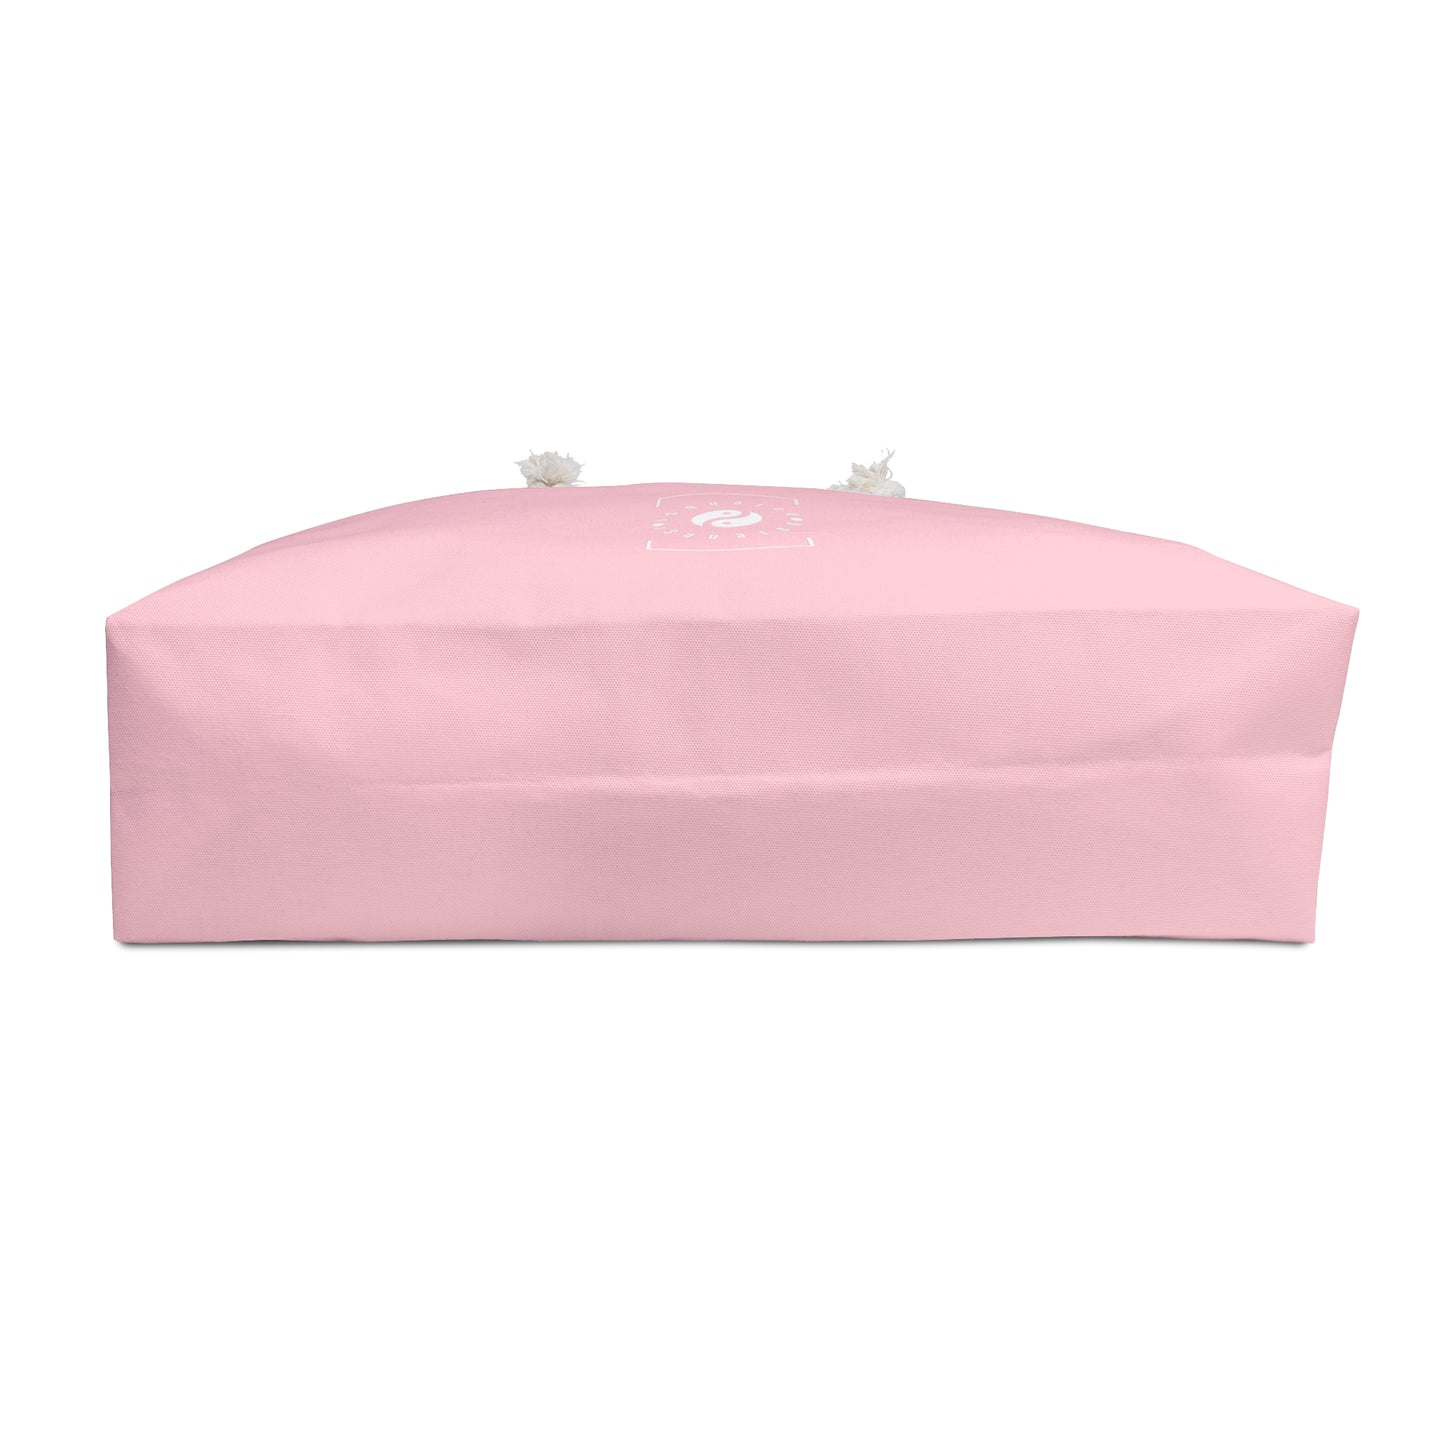 FFCCD4 Light Pink - Casual Yoga Bag